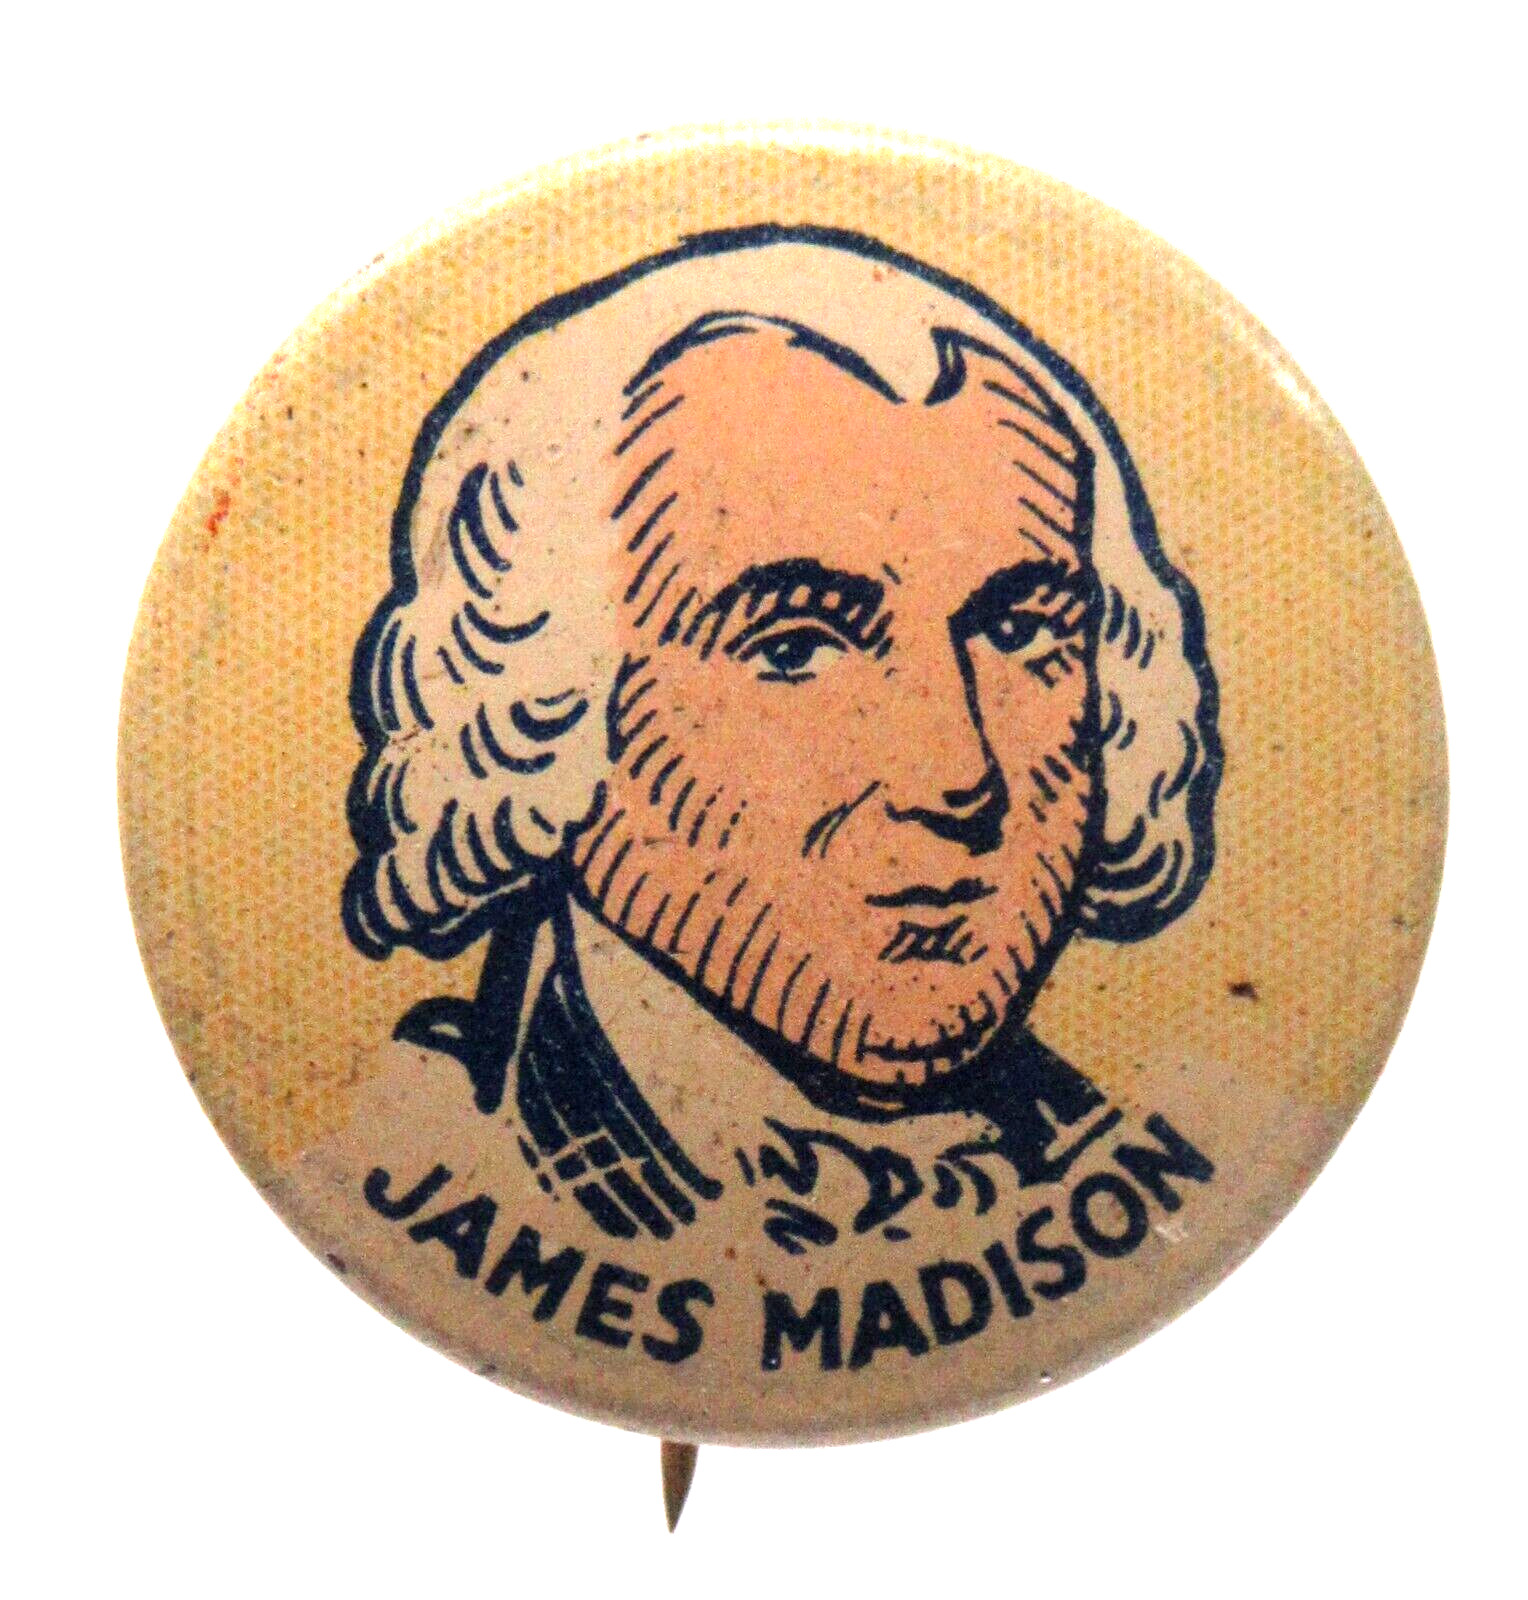 1930's JAMES MADISON Cracker Jack pinback button PRESIDENT h5